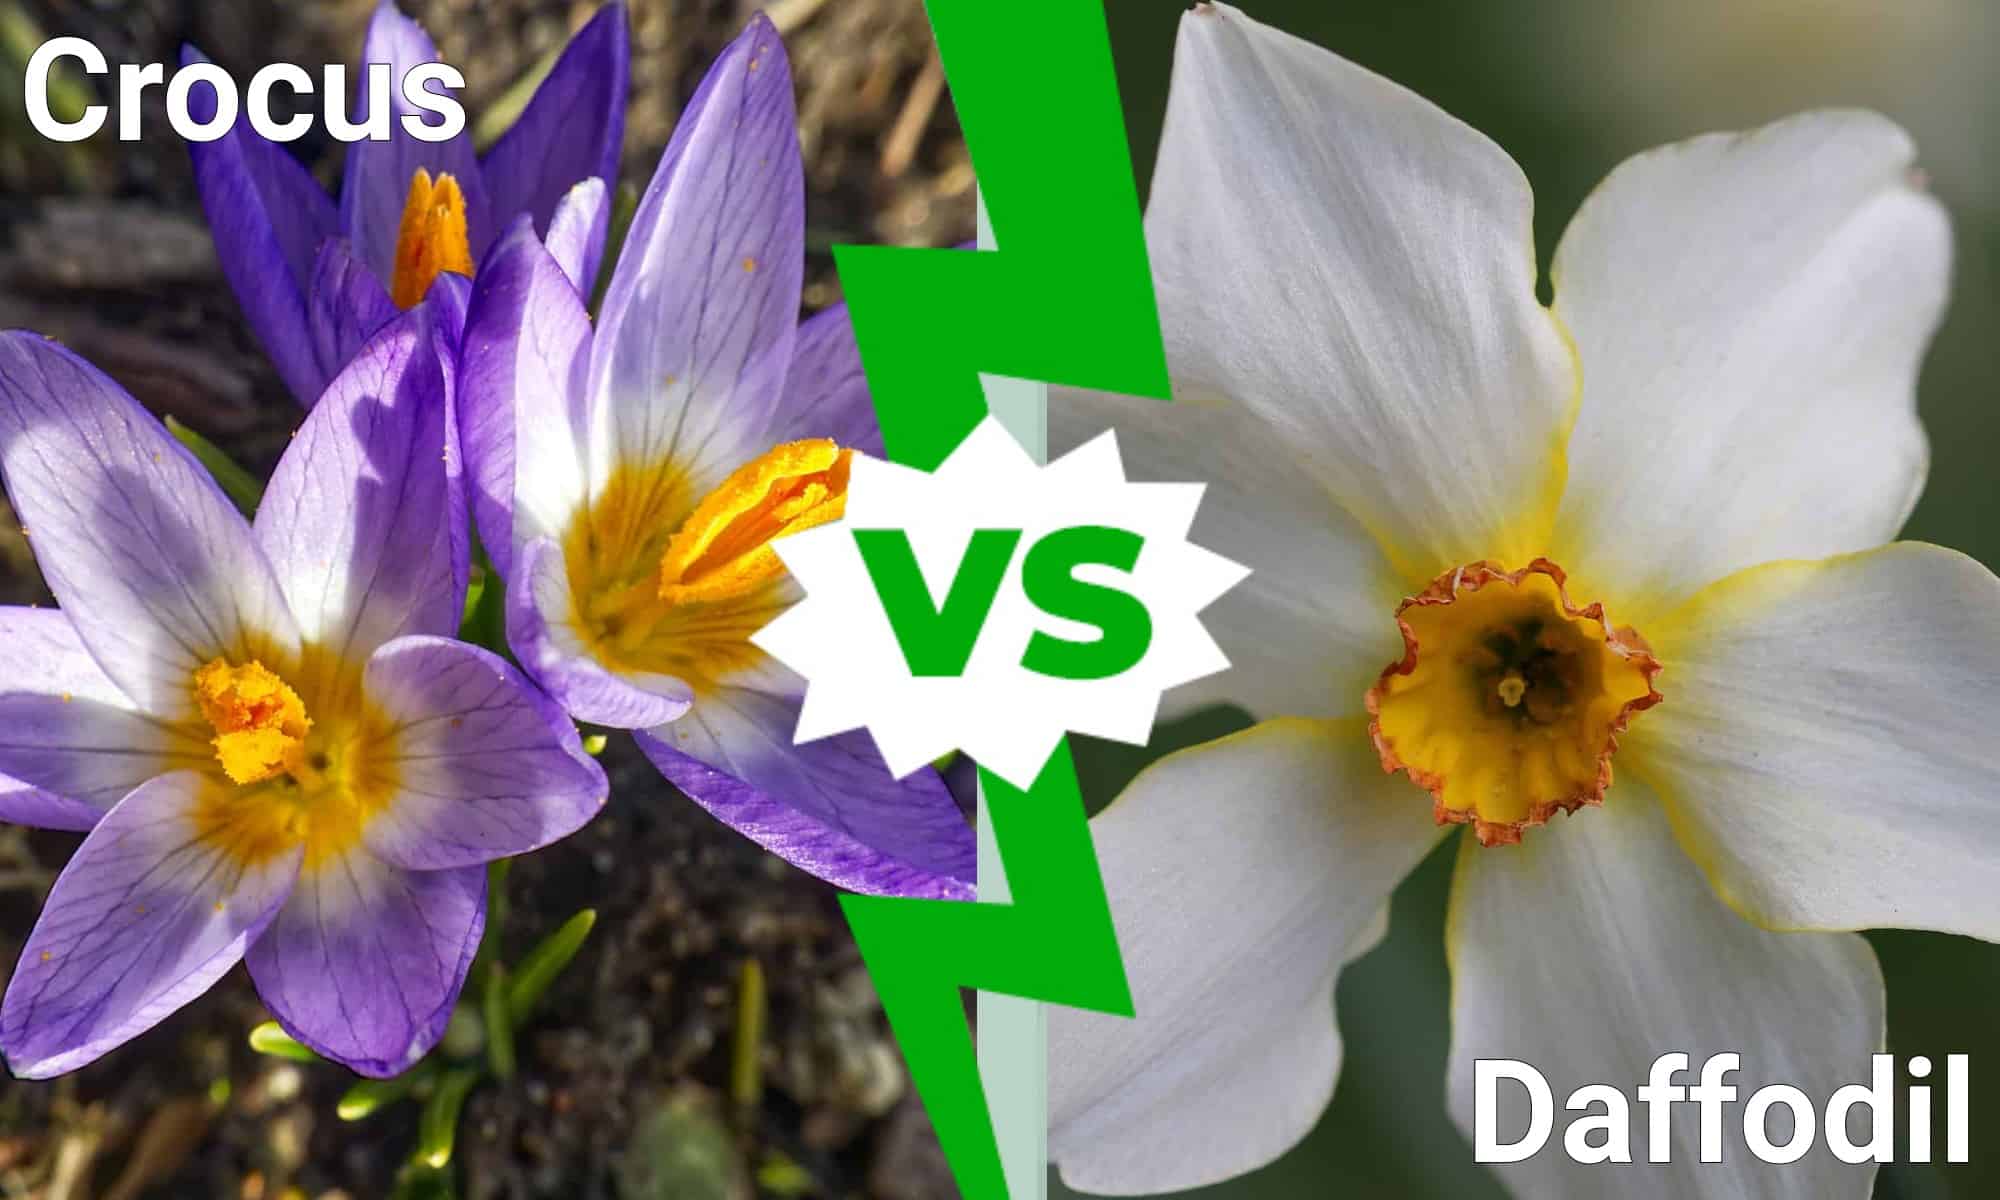 Image of Crocus and daffodils